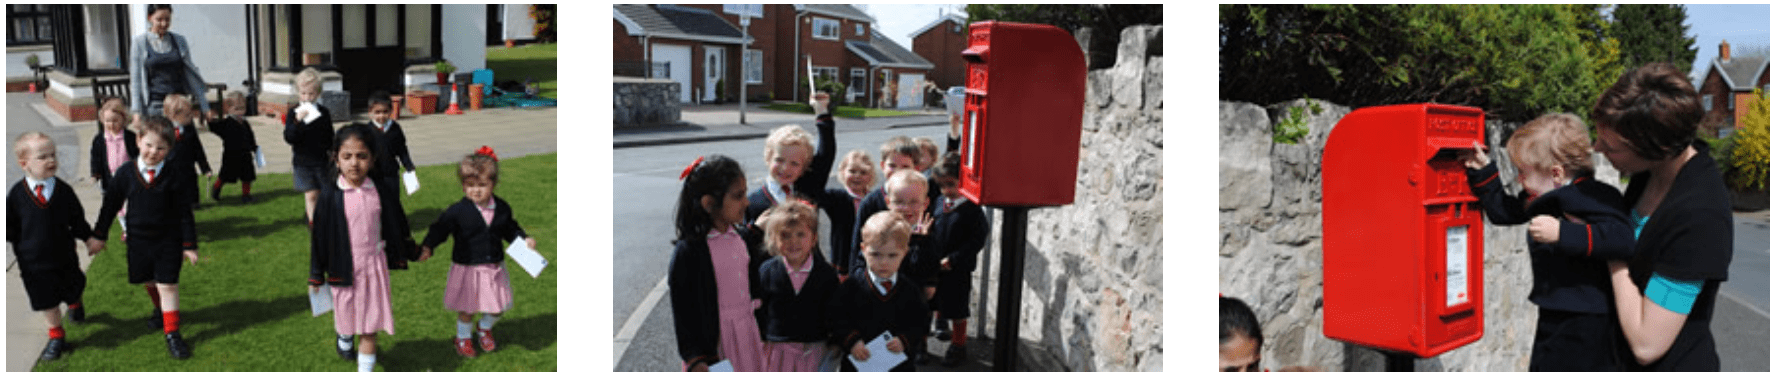 Fairholme Preparatory School: Trip to the Postbox